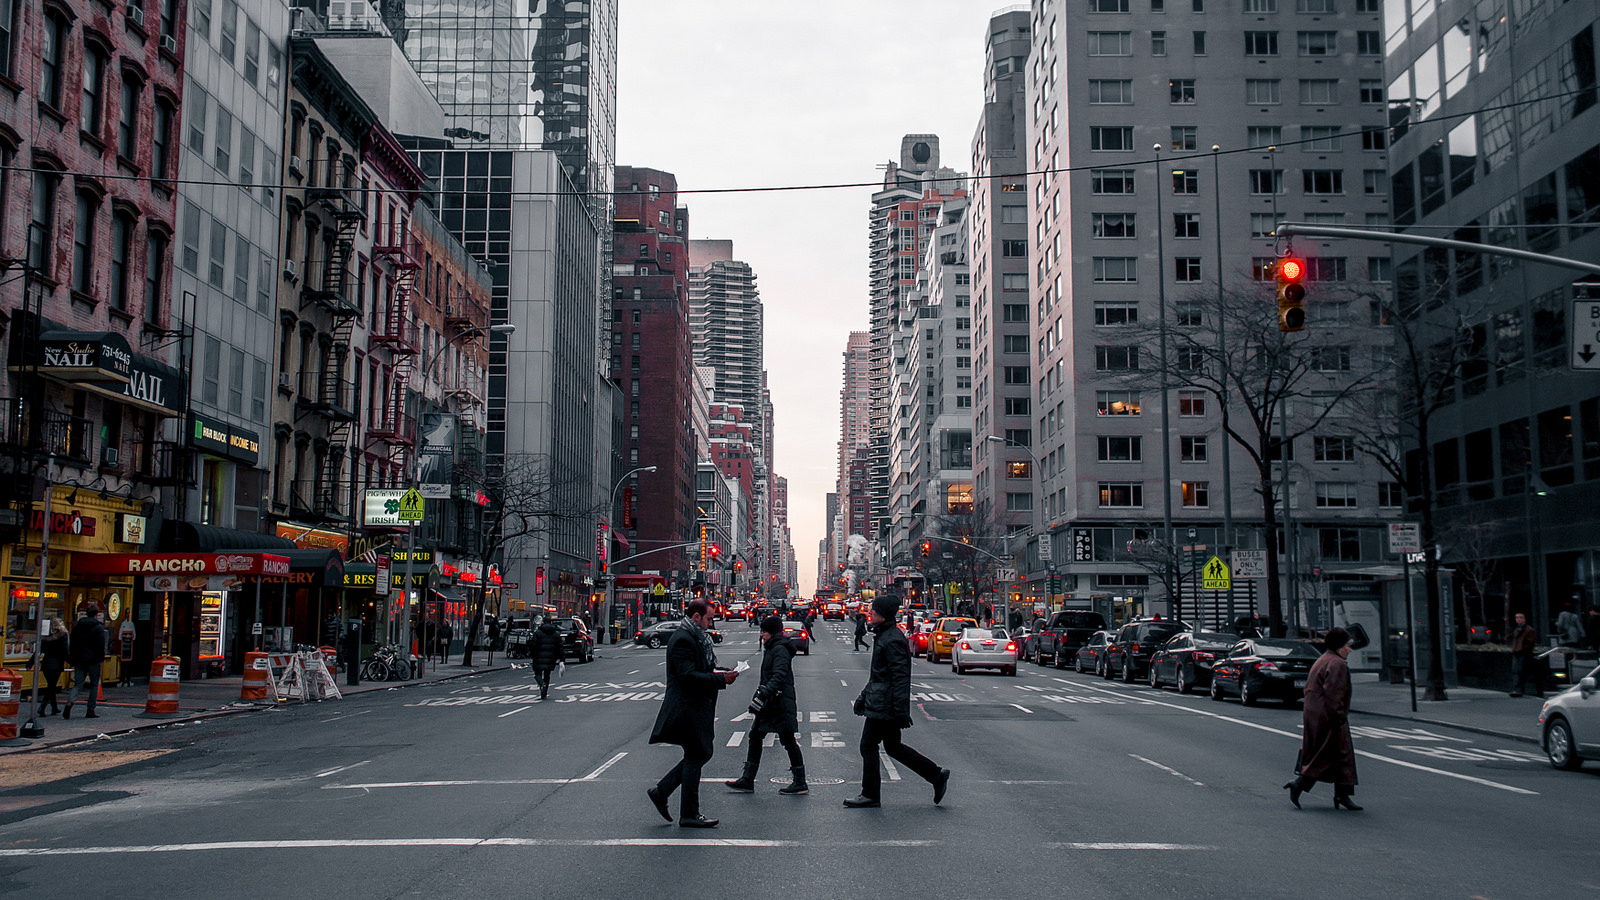 Pedestrians crossing street in New York City